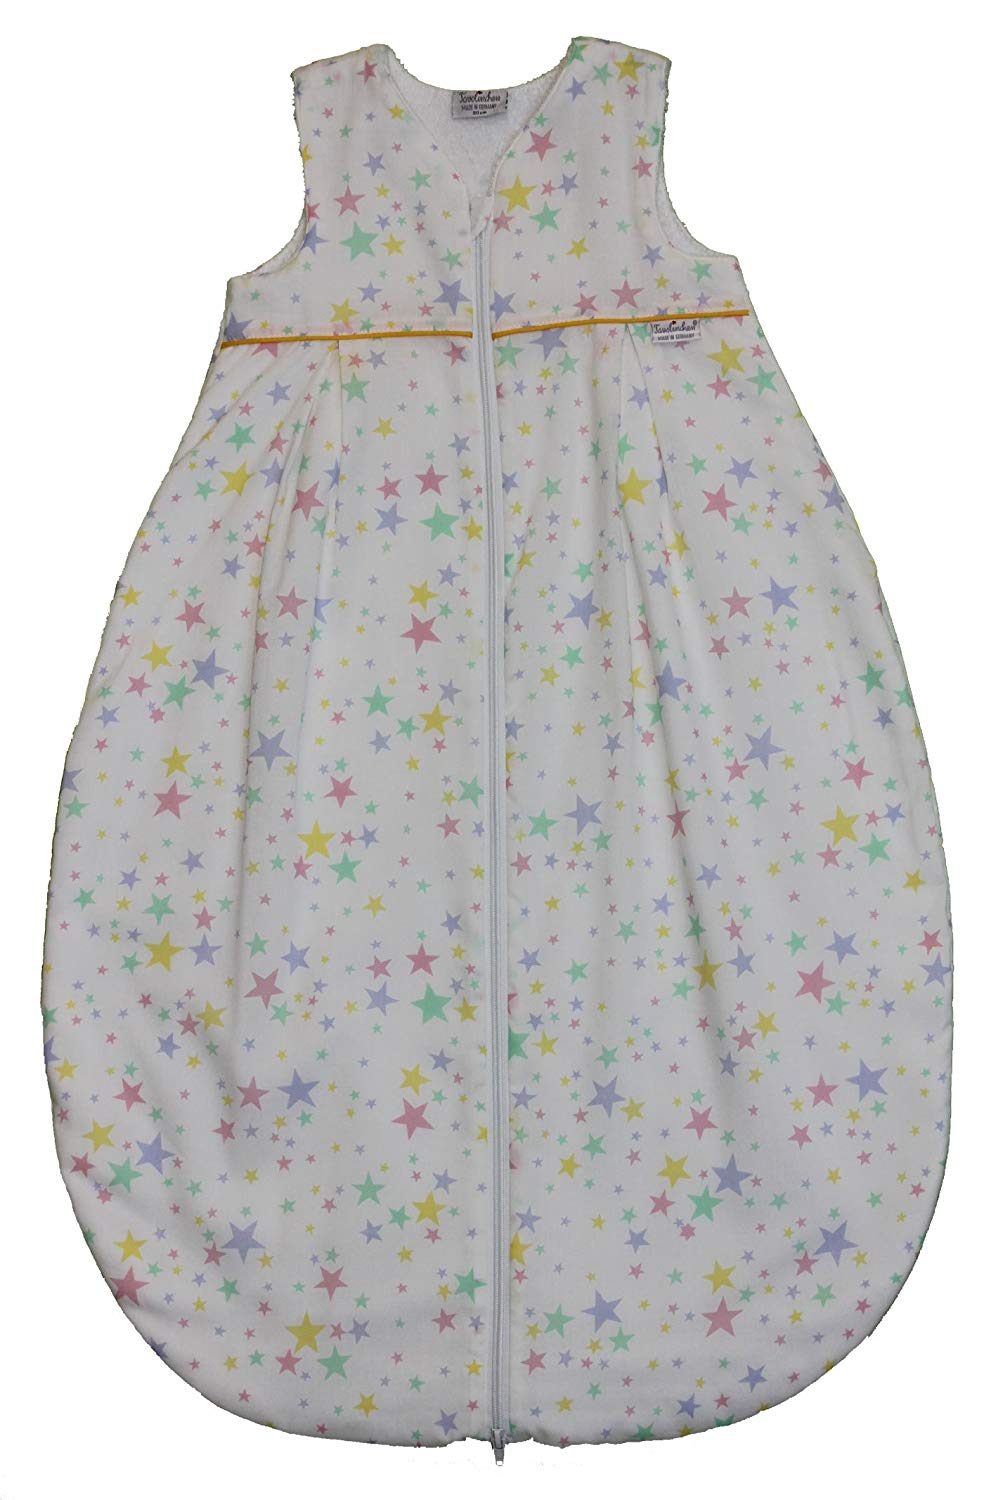 Tavolinchen 35/1585 Terry Cloth Stars Sleeping Bag 110 cm 110 cm original